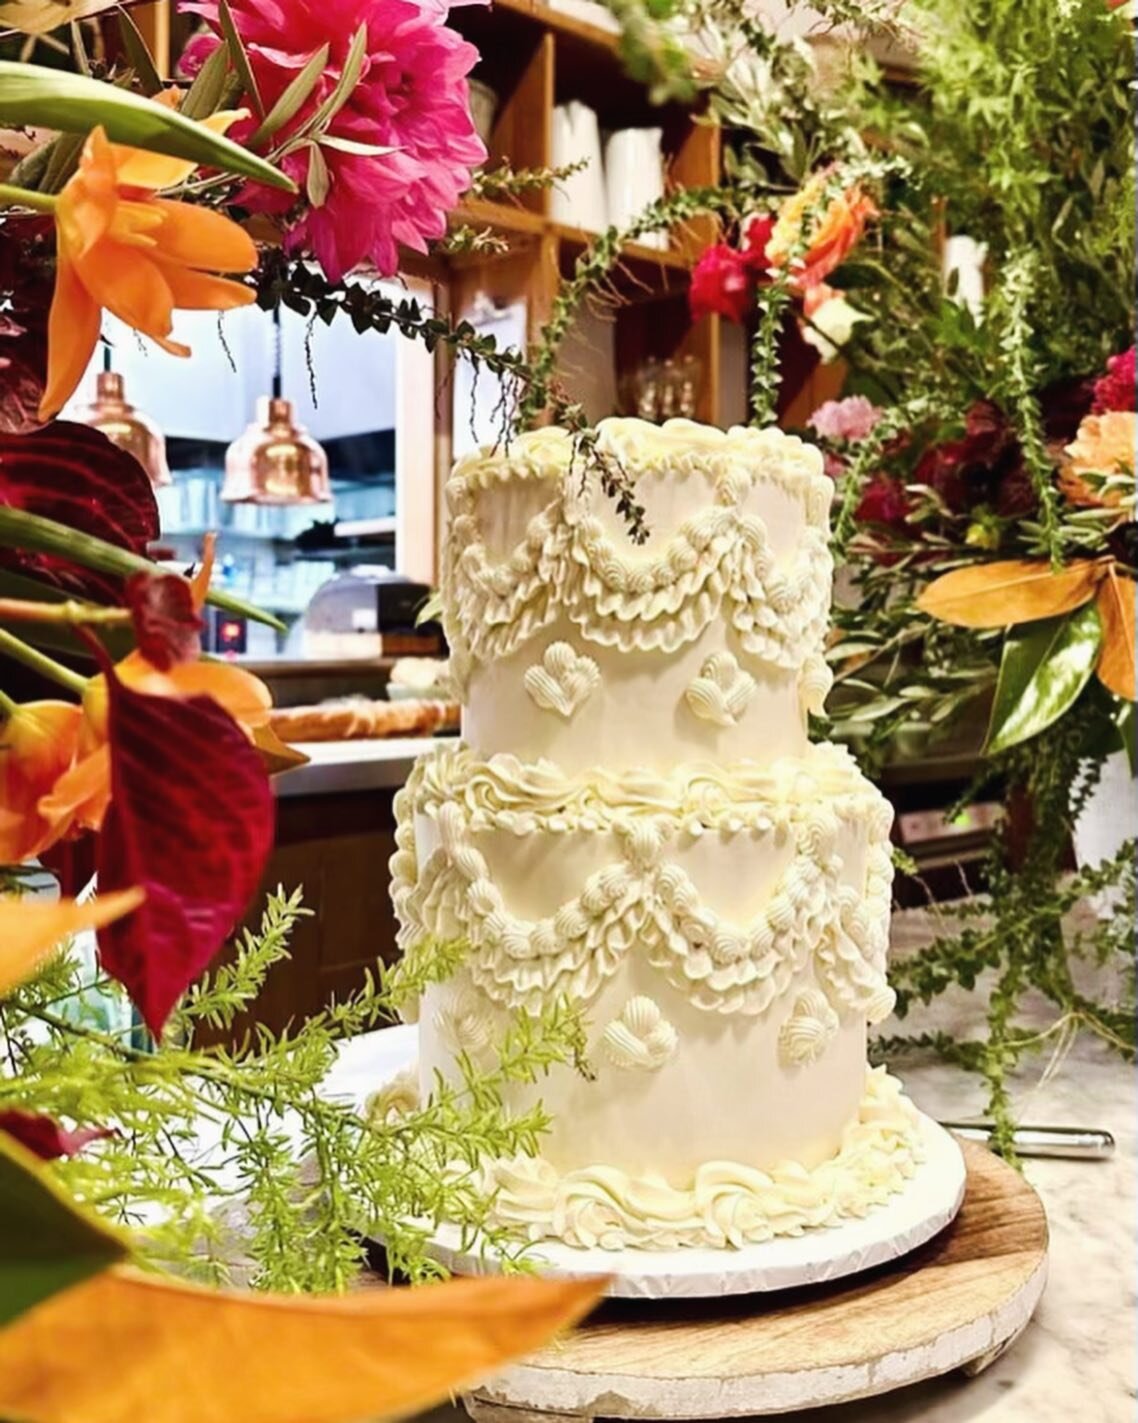 Sitting pretty amongst those blooms, vintage wedding cake bliss! #vintageweddingcake #weddingcakeideas #weddingcakeinspiration #melbourneweddingvenues #melbourneweddingcakes #melbournecake #weddingflowersinspiration #buttercreamcakedesign #weddingcak